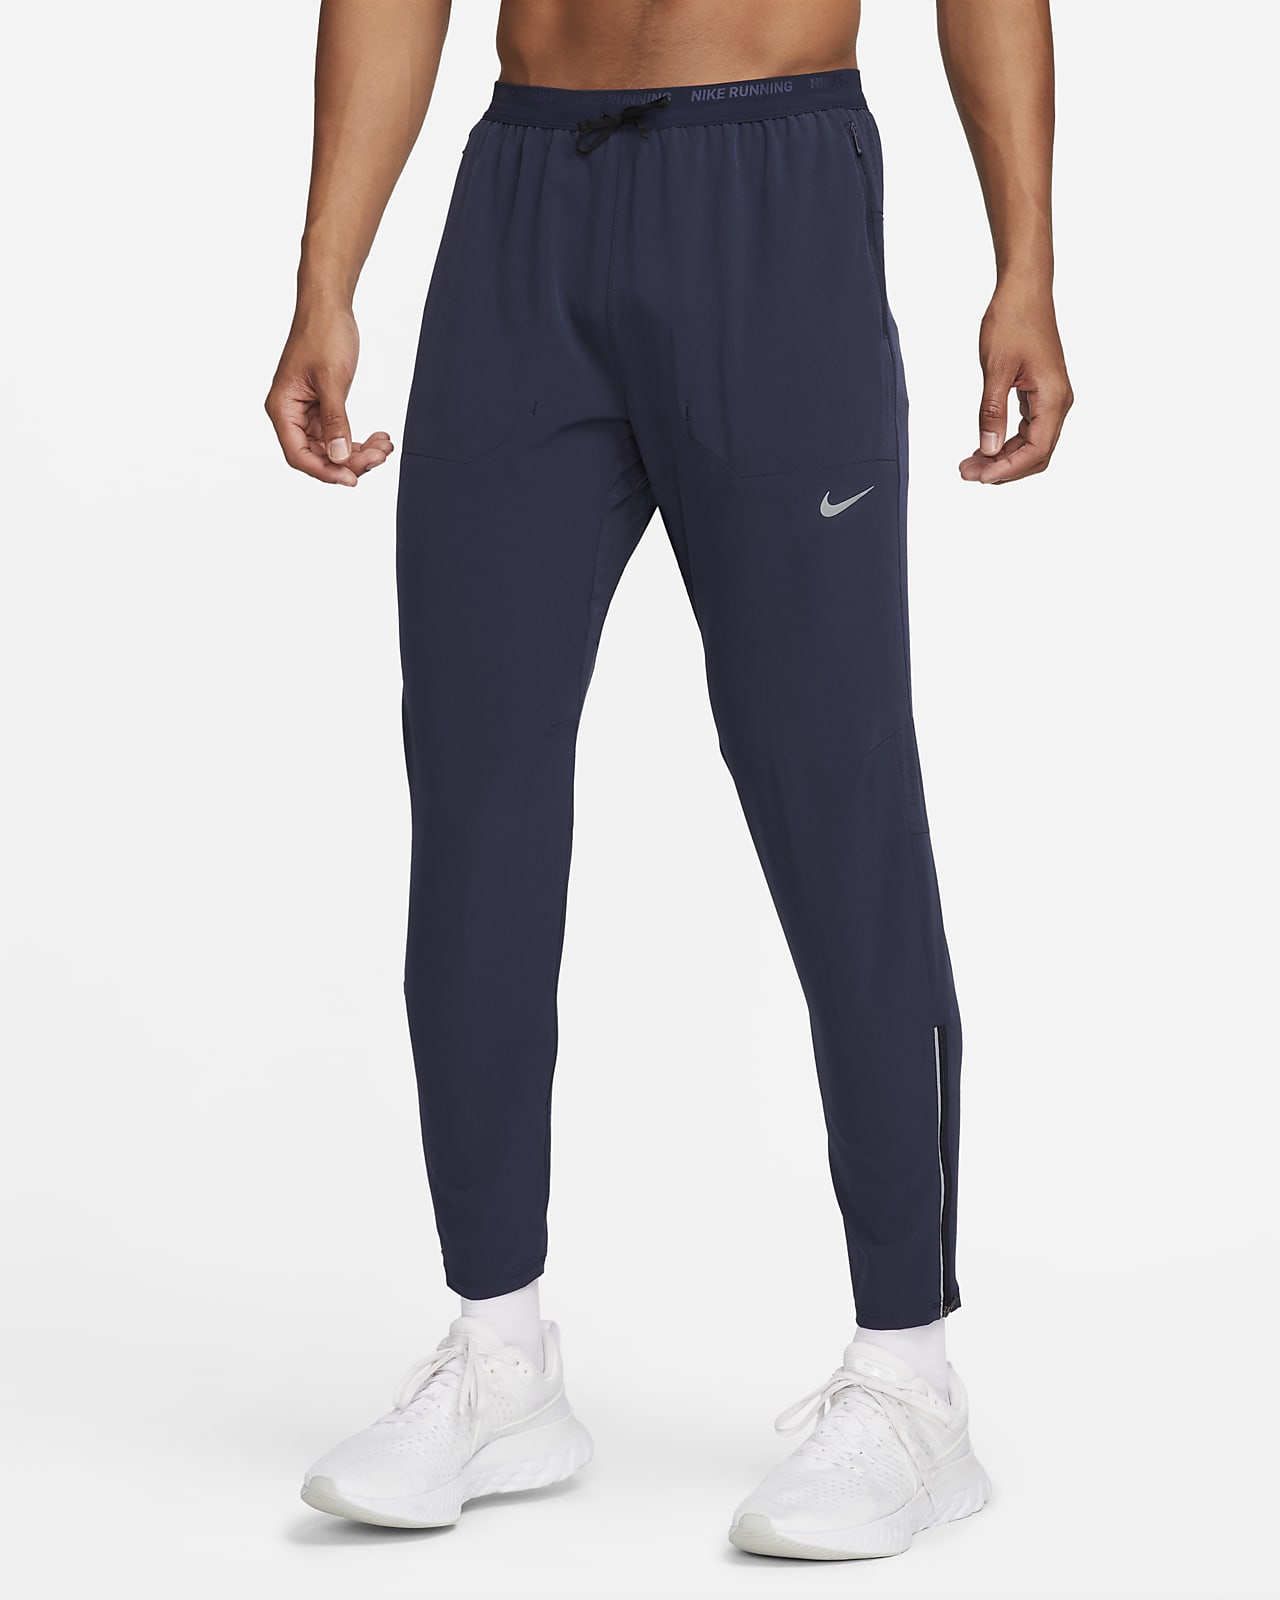 Pantalon de running tissé Dri-FIT Nike Phenom pour homme